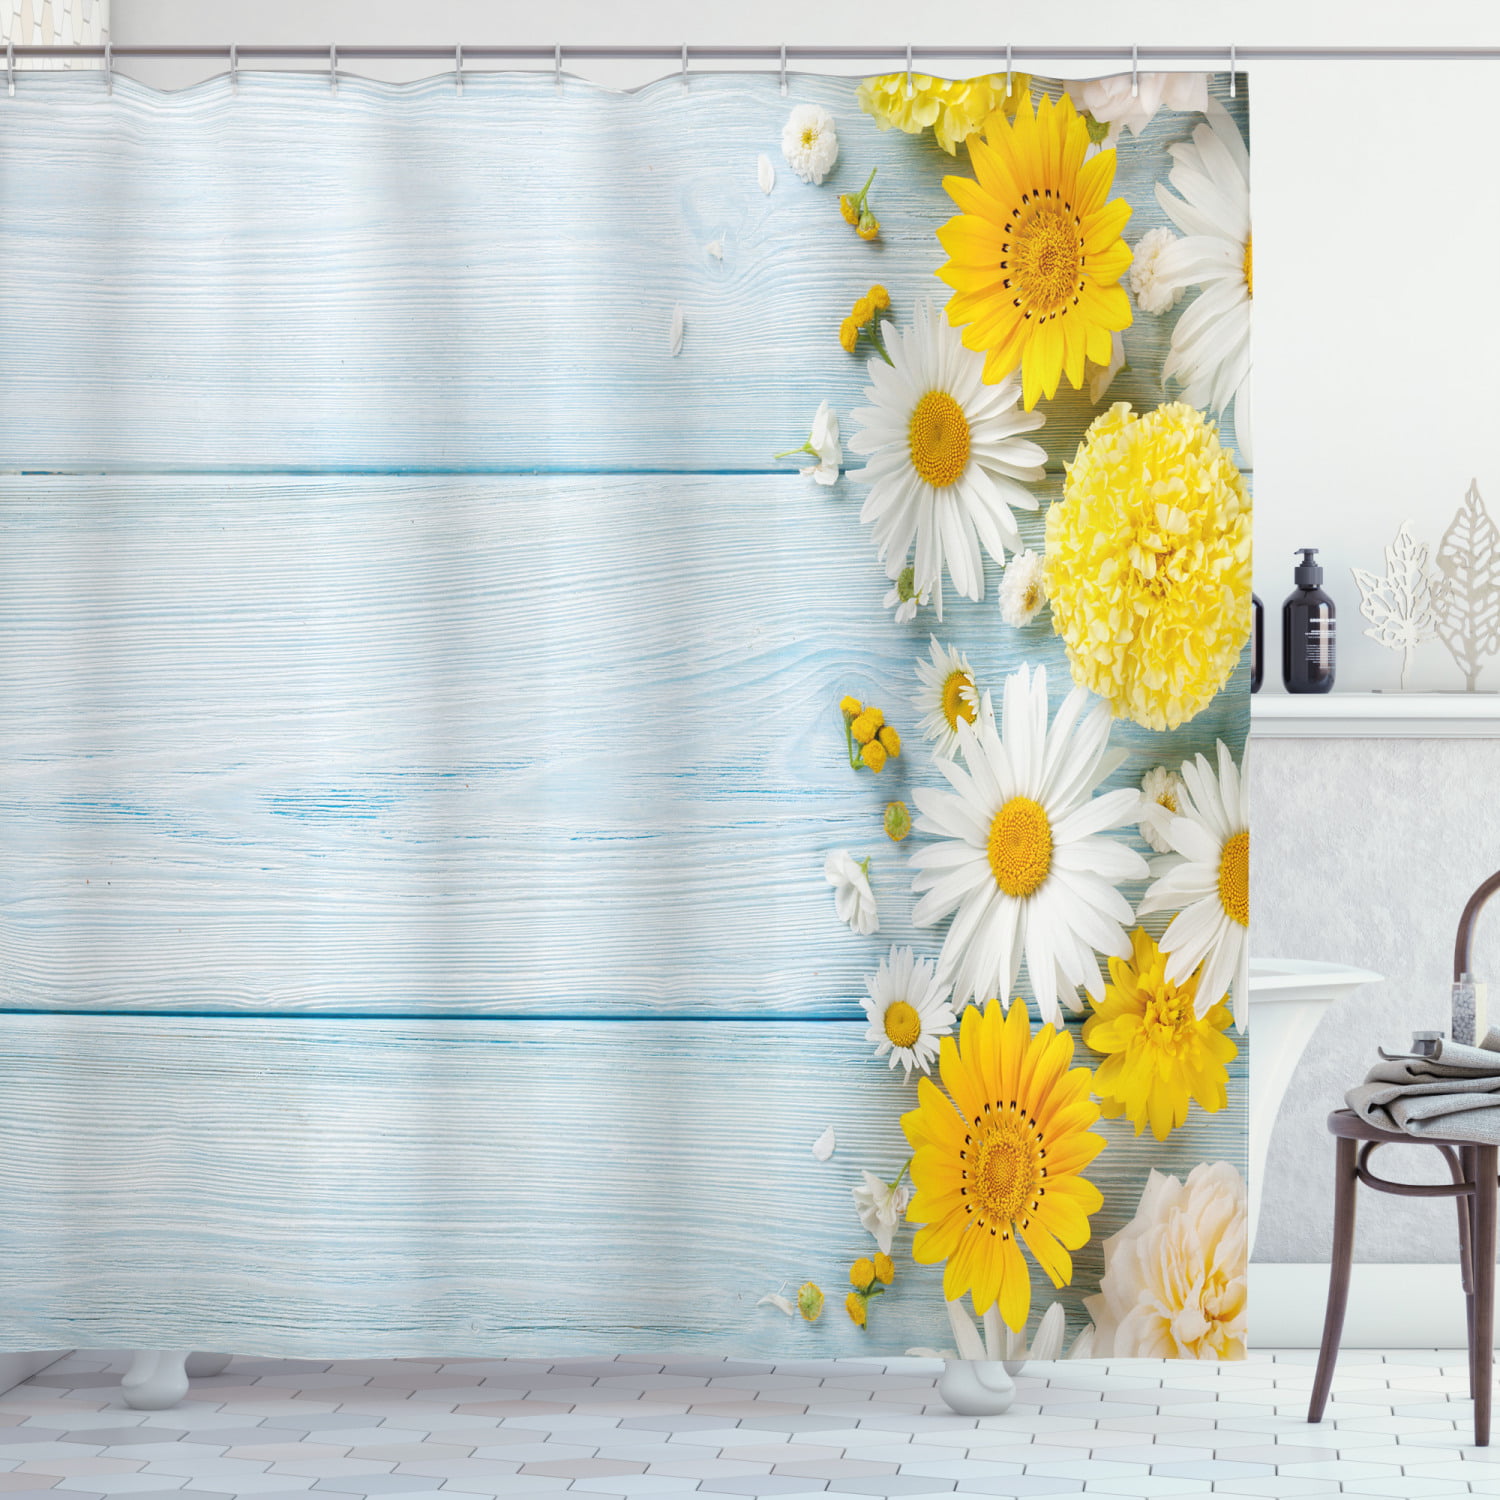 Daisy Flower Bubbles Rustic Wood Planks Fabric Shower Curtain Set Bathroom Decor